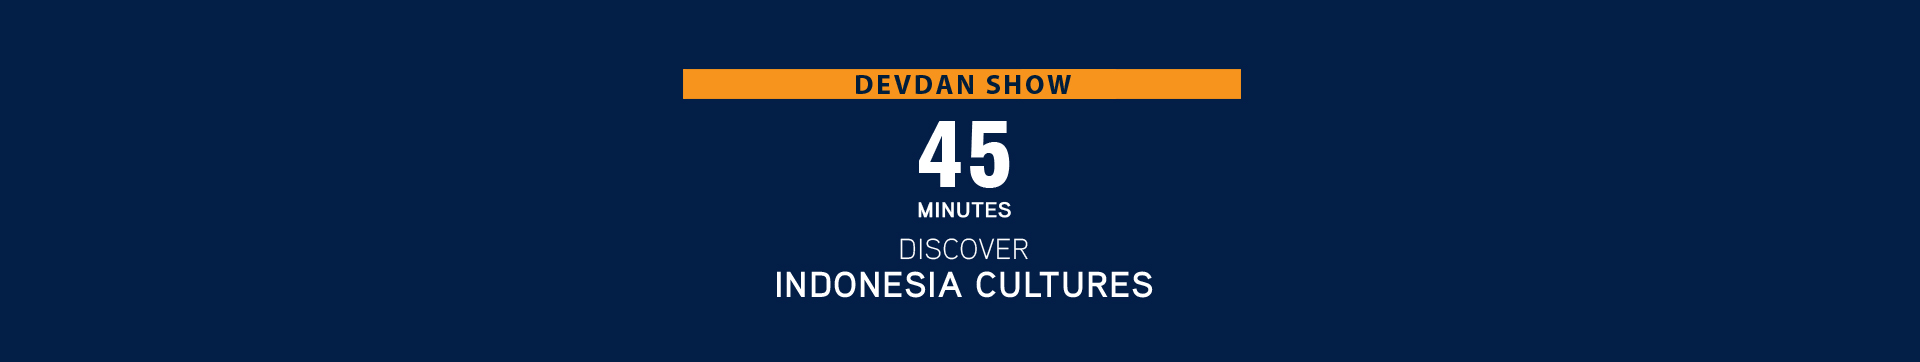 Devdan Show di Bali Nusa Dua Theatre